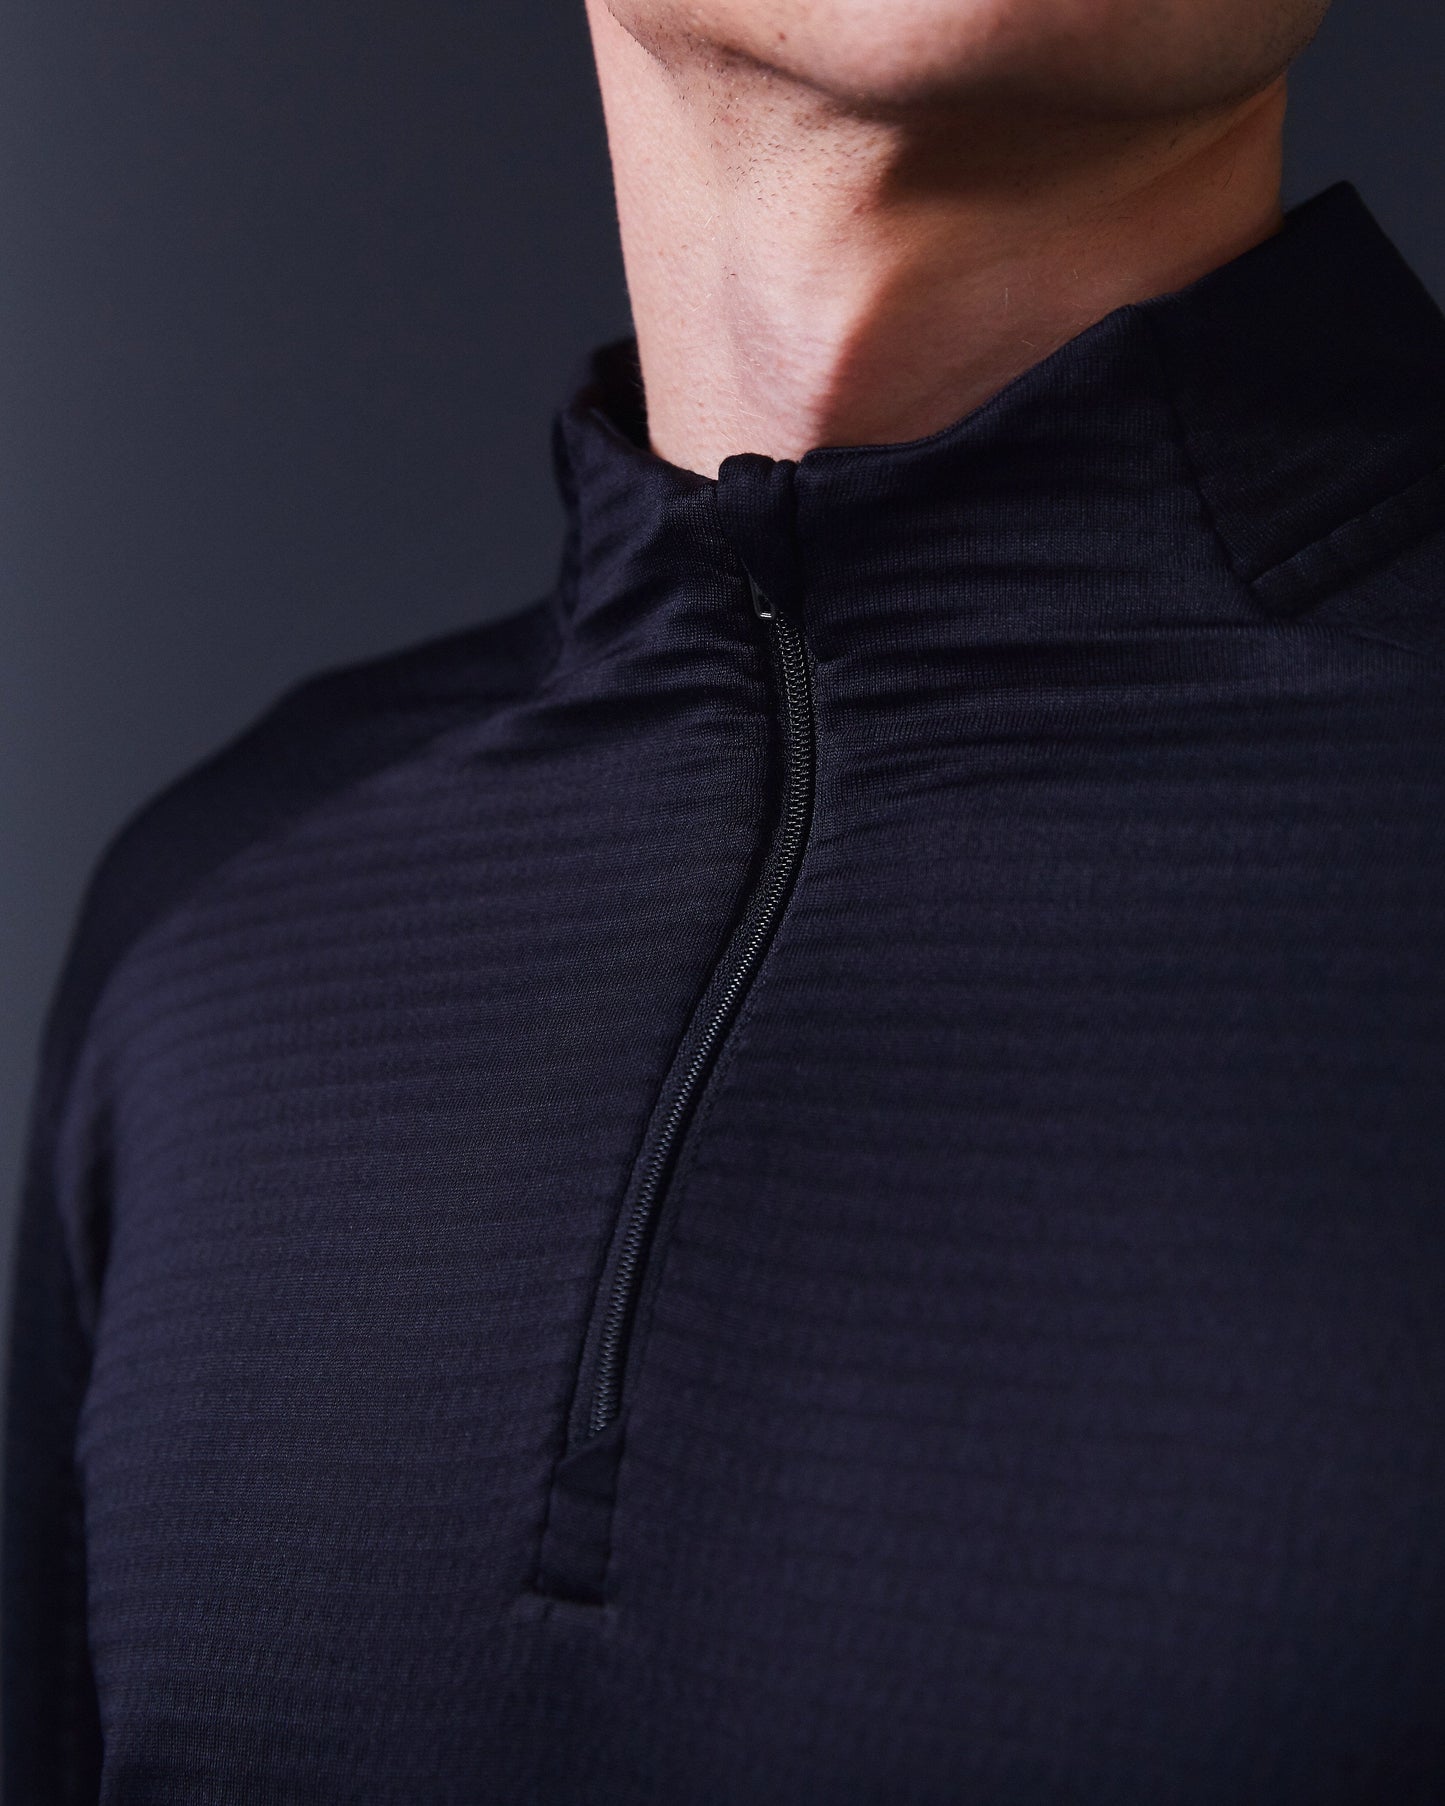 SUDU SRZ 01 Run Zip Mid-Layer - Black Beauty / Aquarius Long Sleeve Shirt